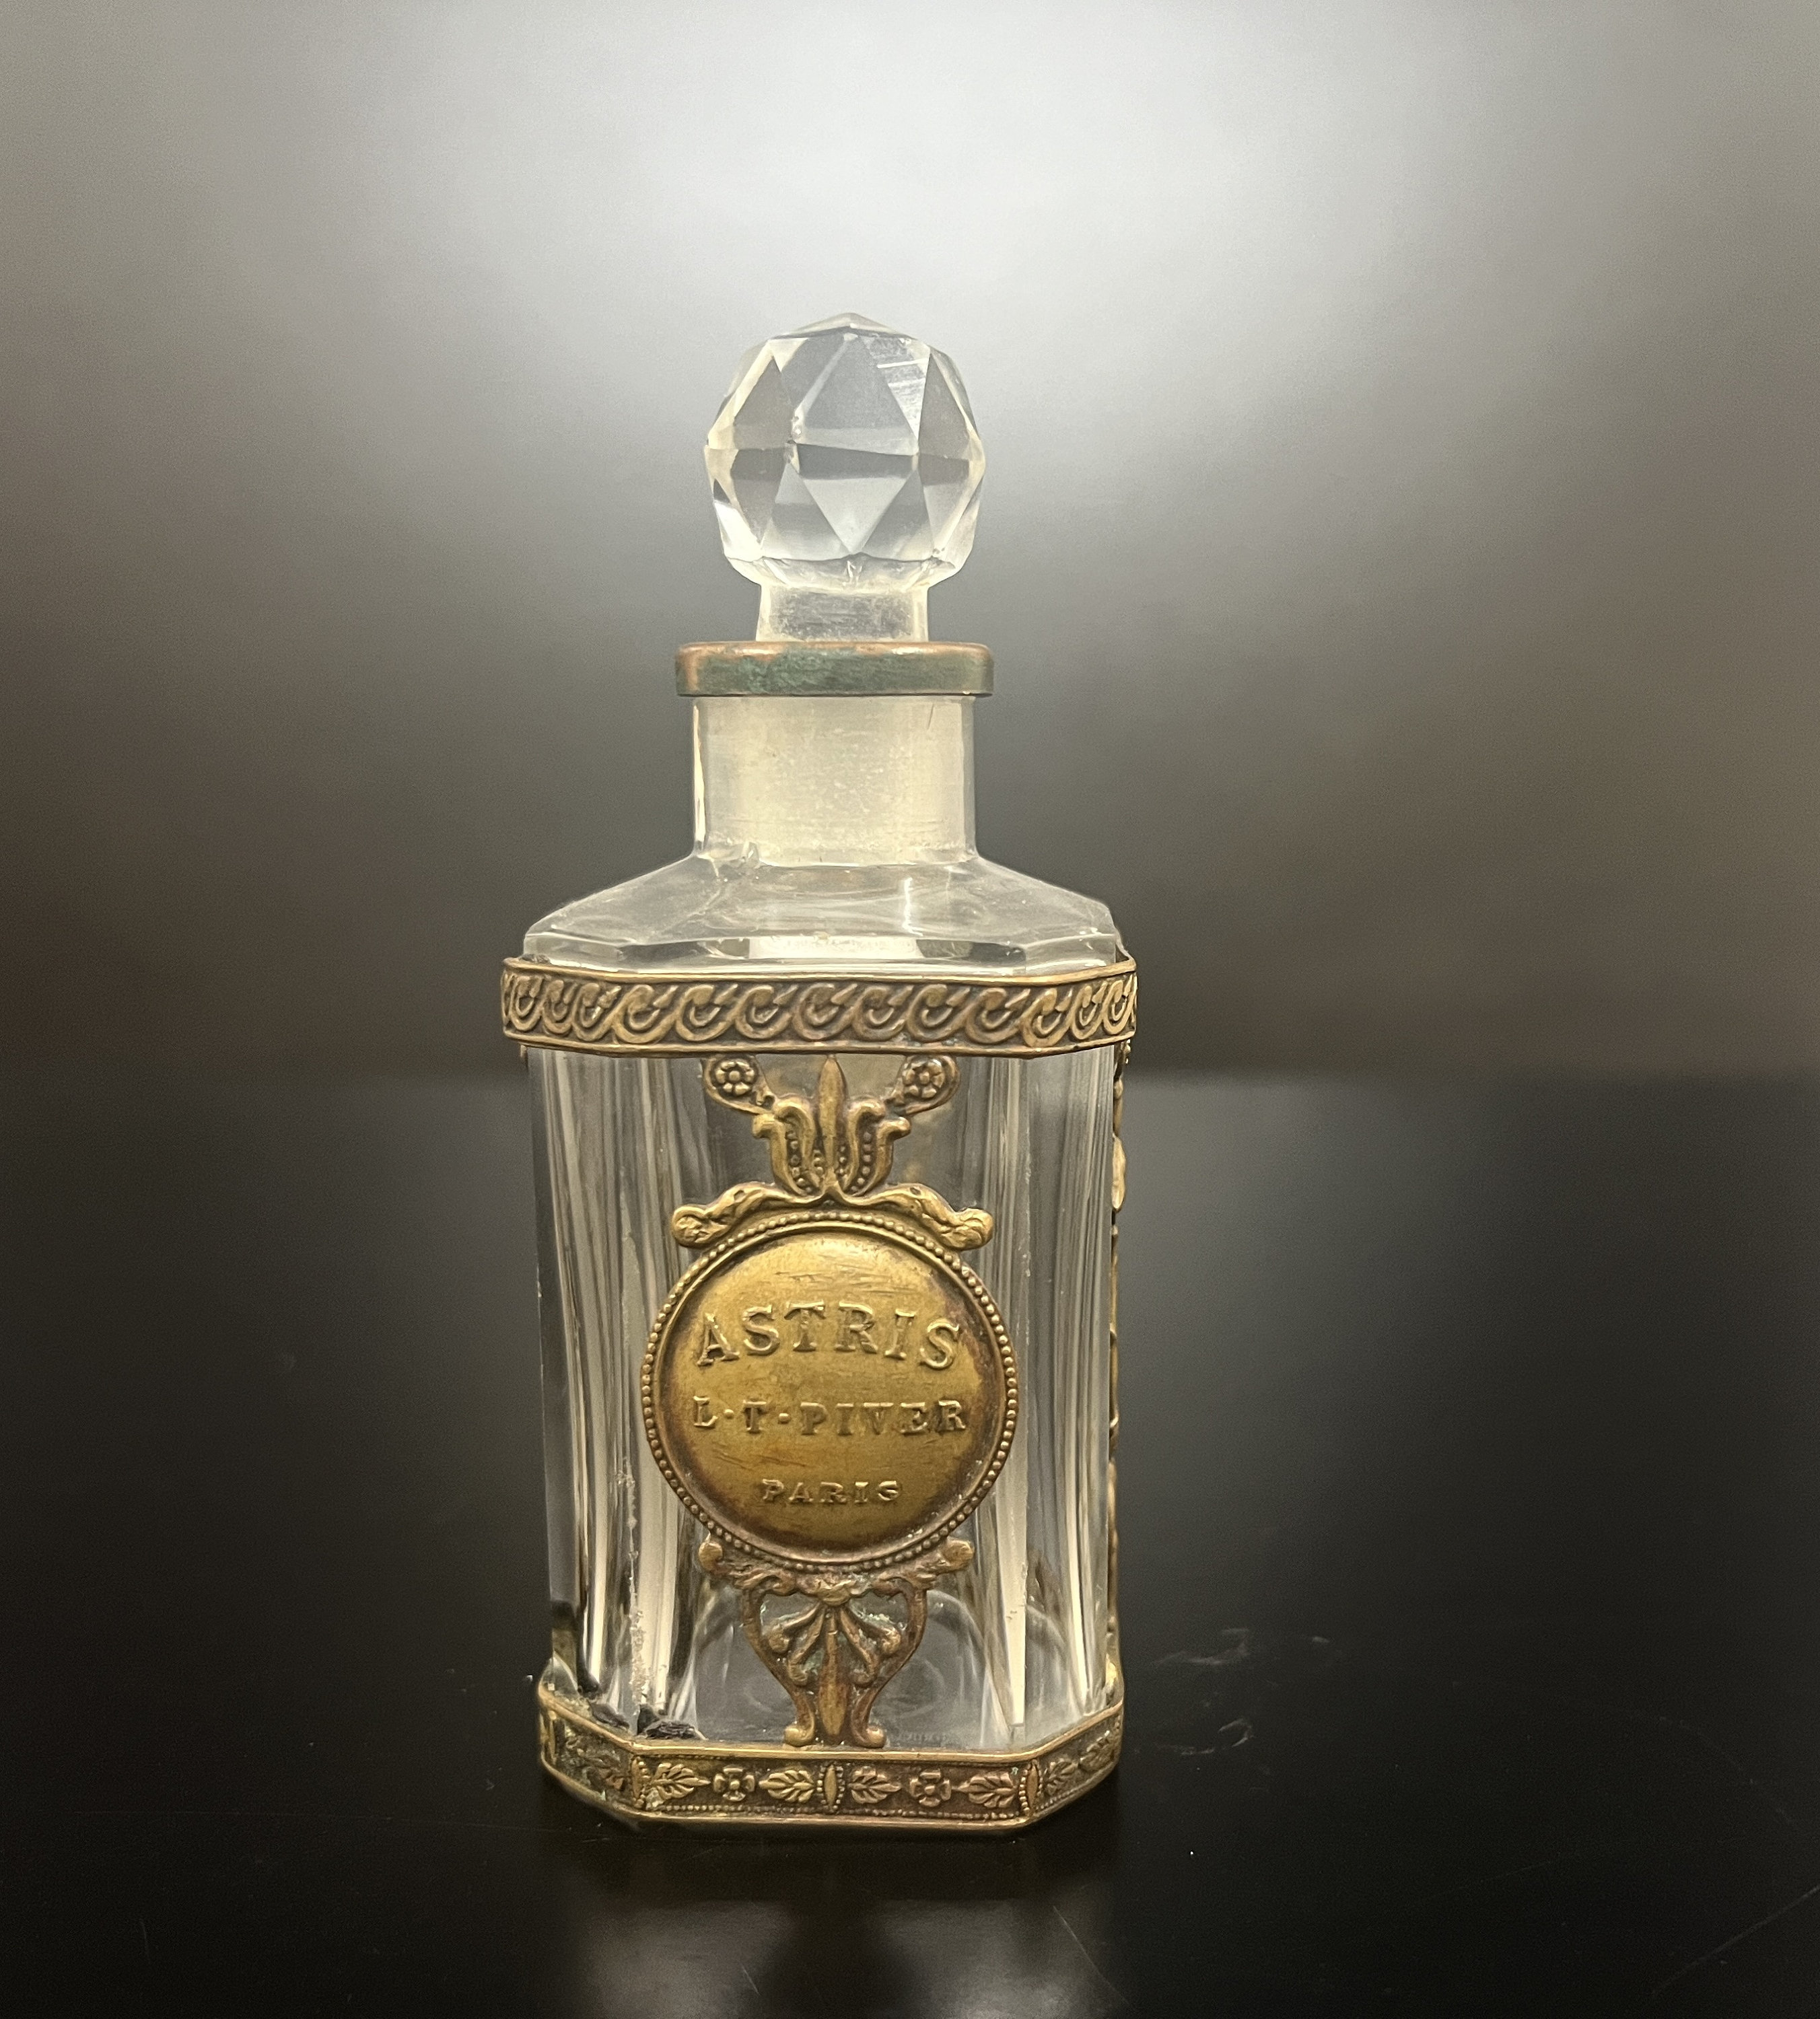 Vintage Baccarat French Astris LT Piver Paris Perfume Bottle - Etsy